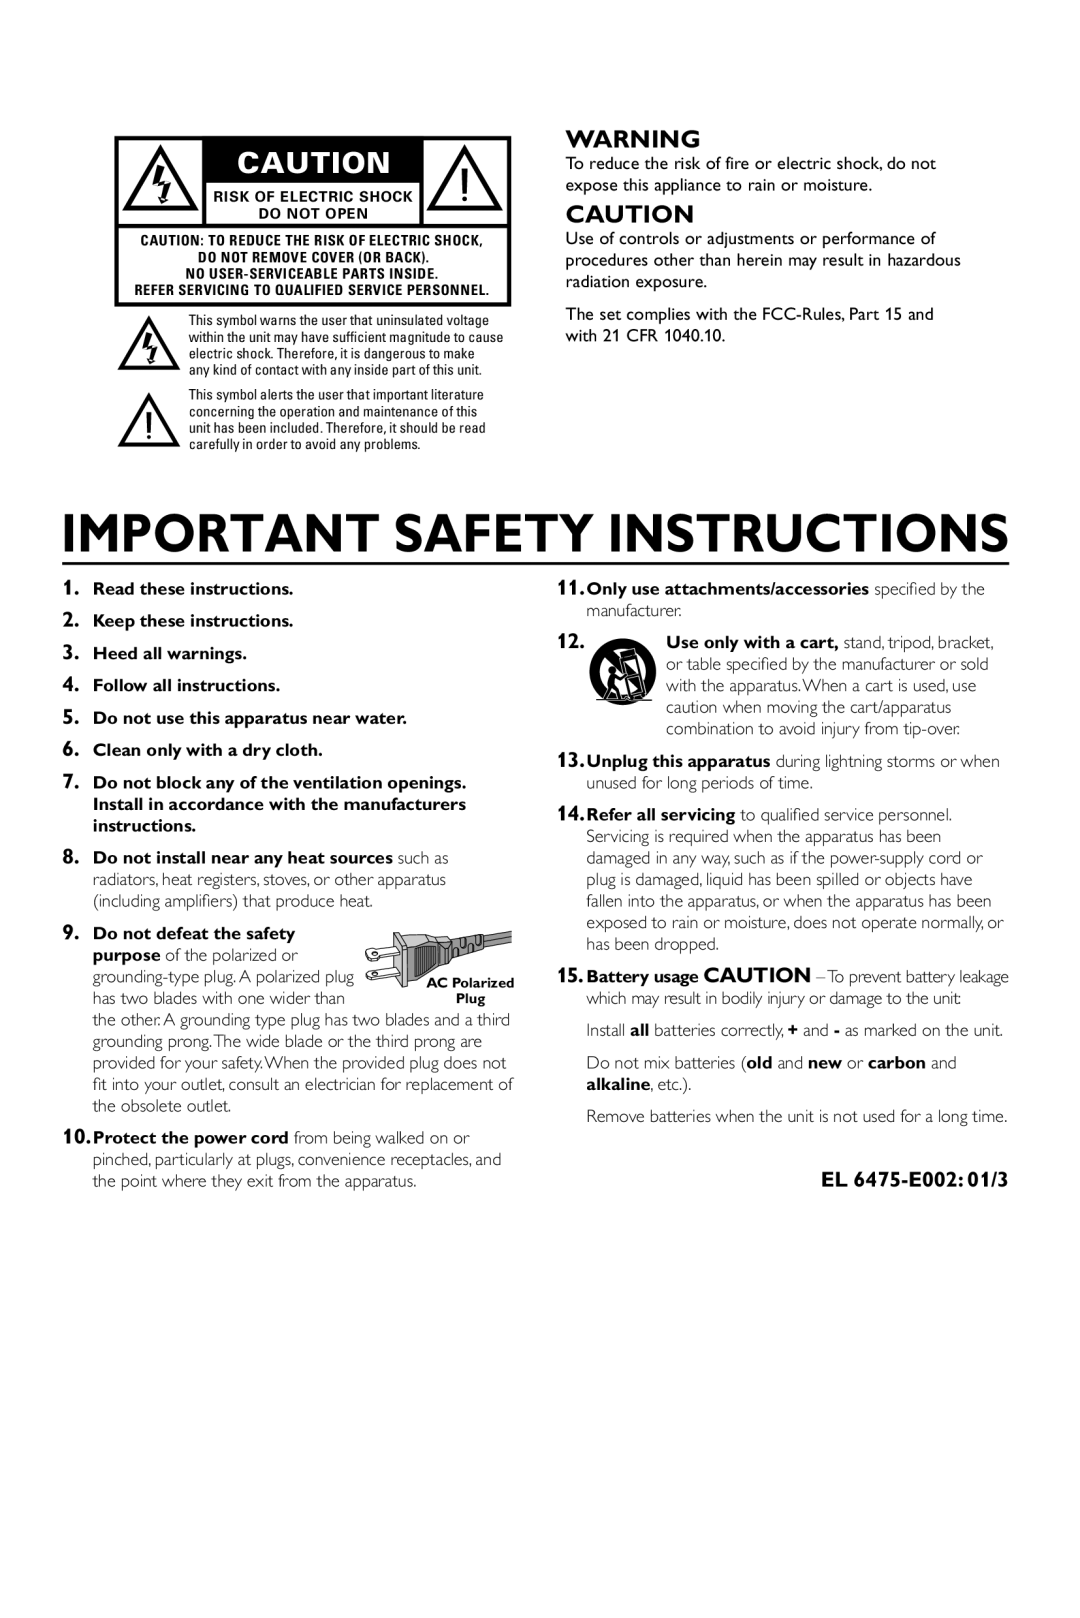 Yamaha DV-S5550 EL 6475-E002 01/3, Important Safety Instructions, Read these instructions, Follow all instructions 